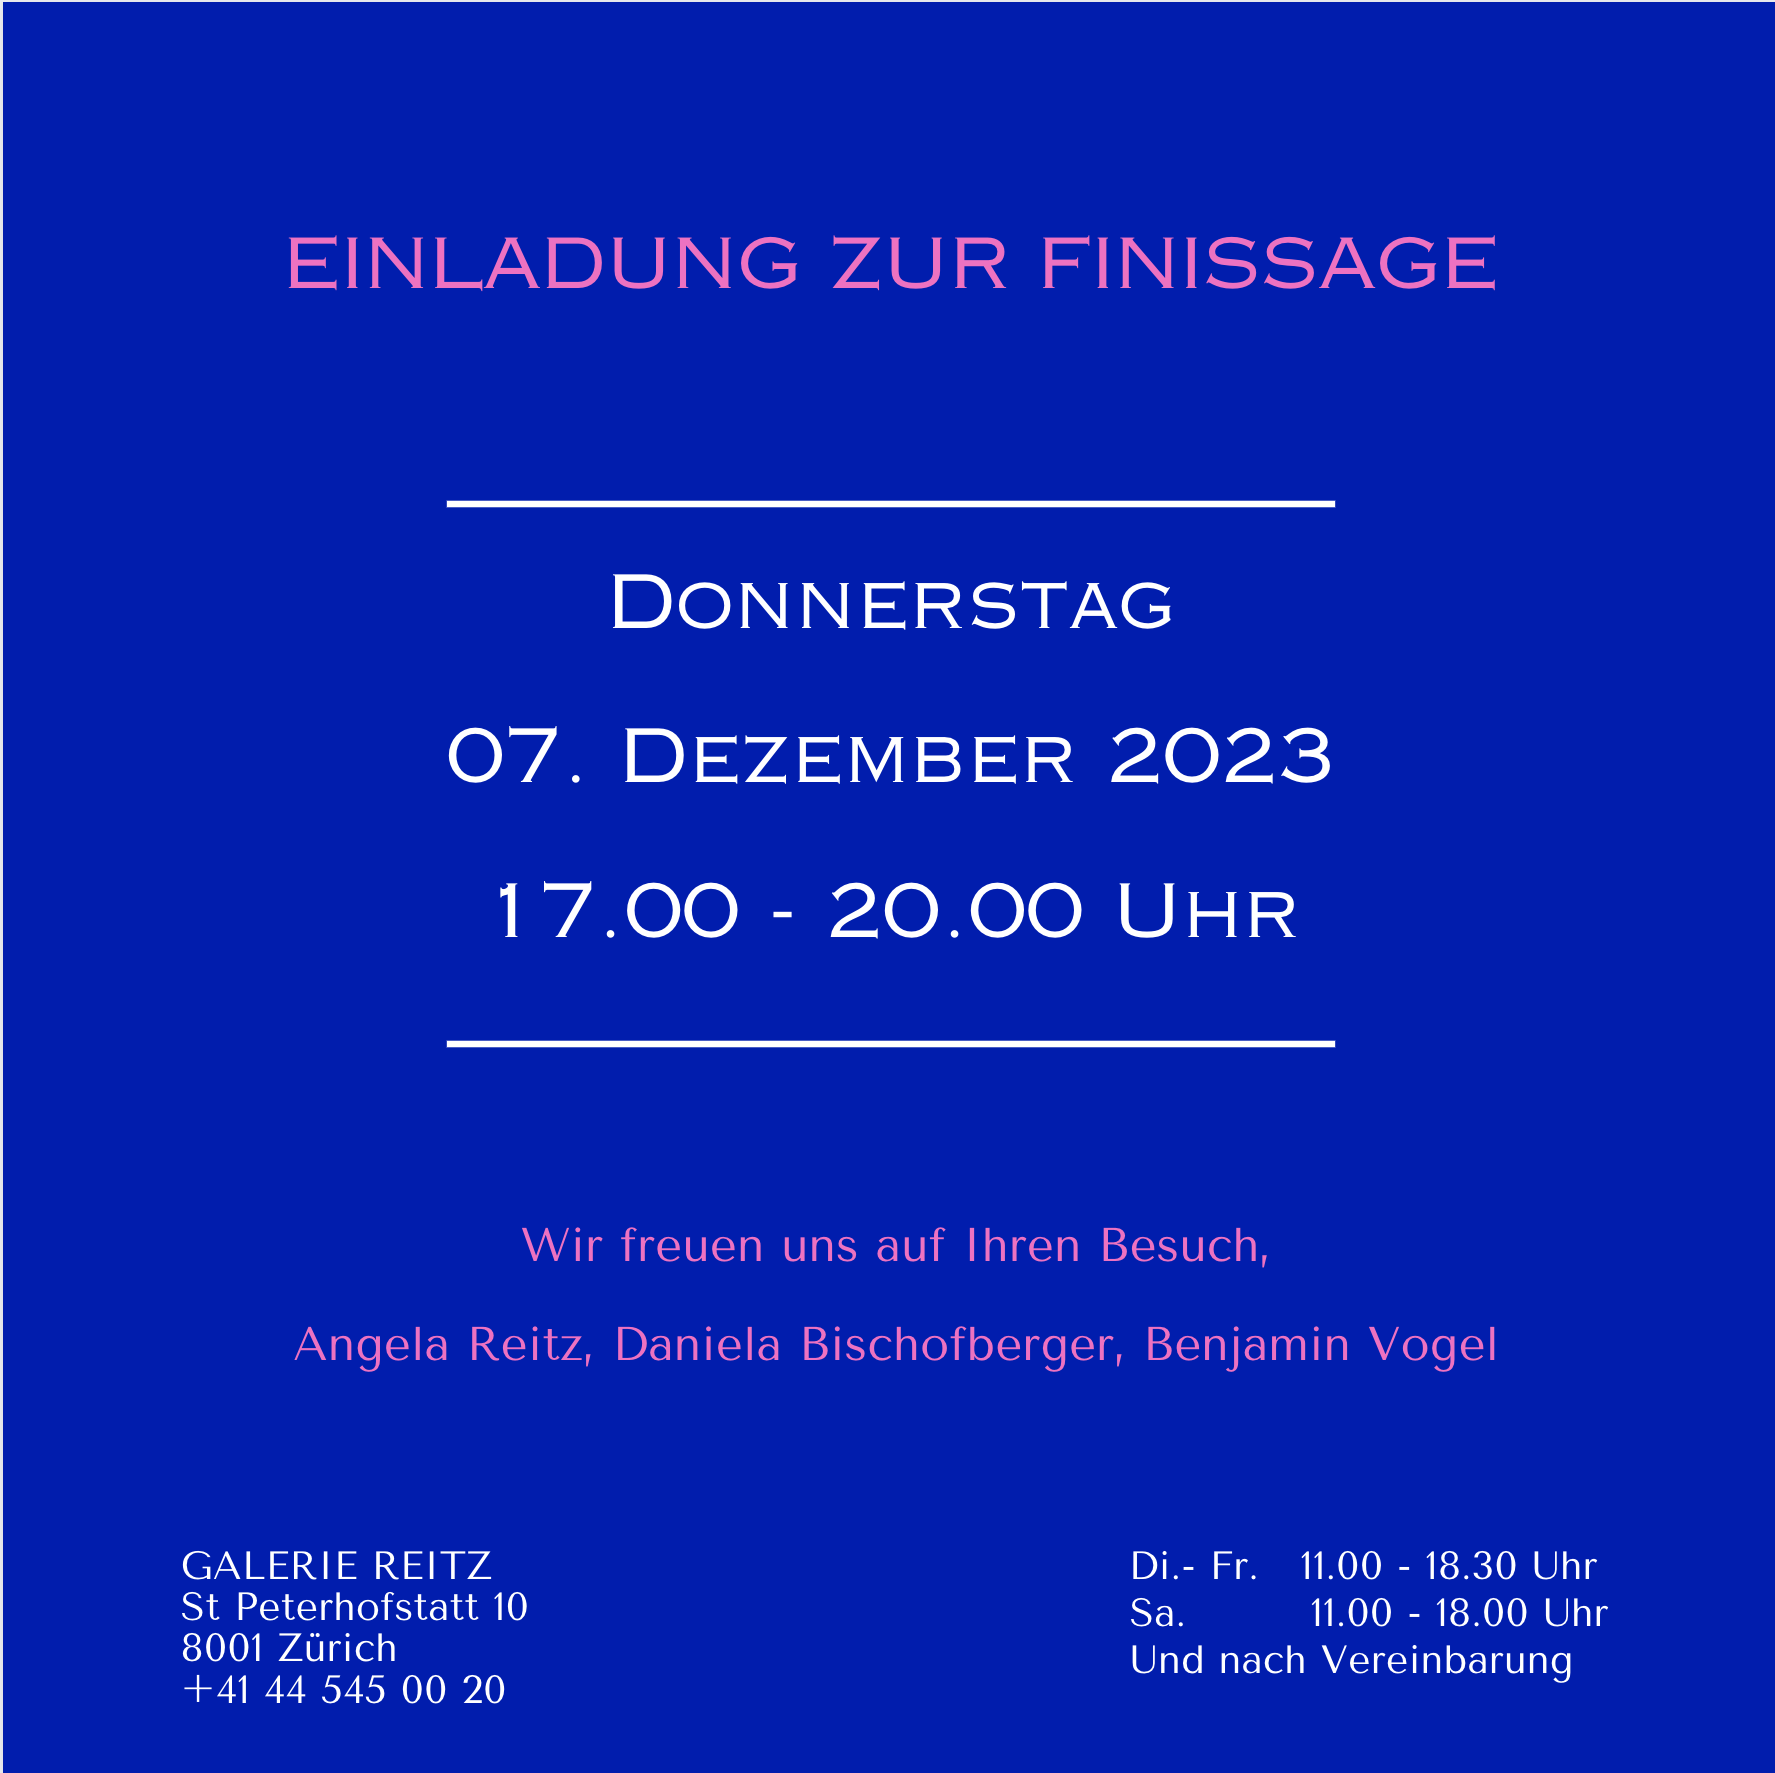 Finissage SZCZESNY in Zürich: November 30, 2023 - December 13, 2023